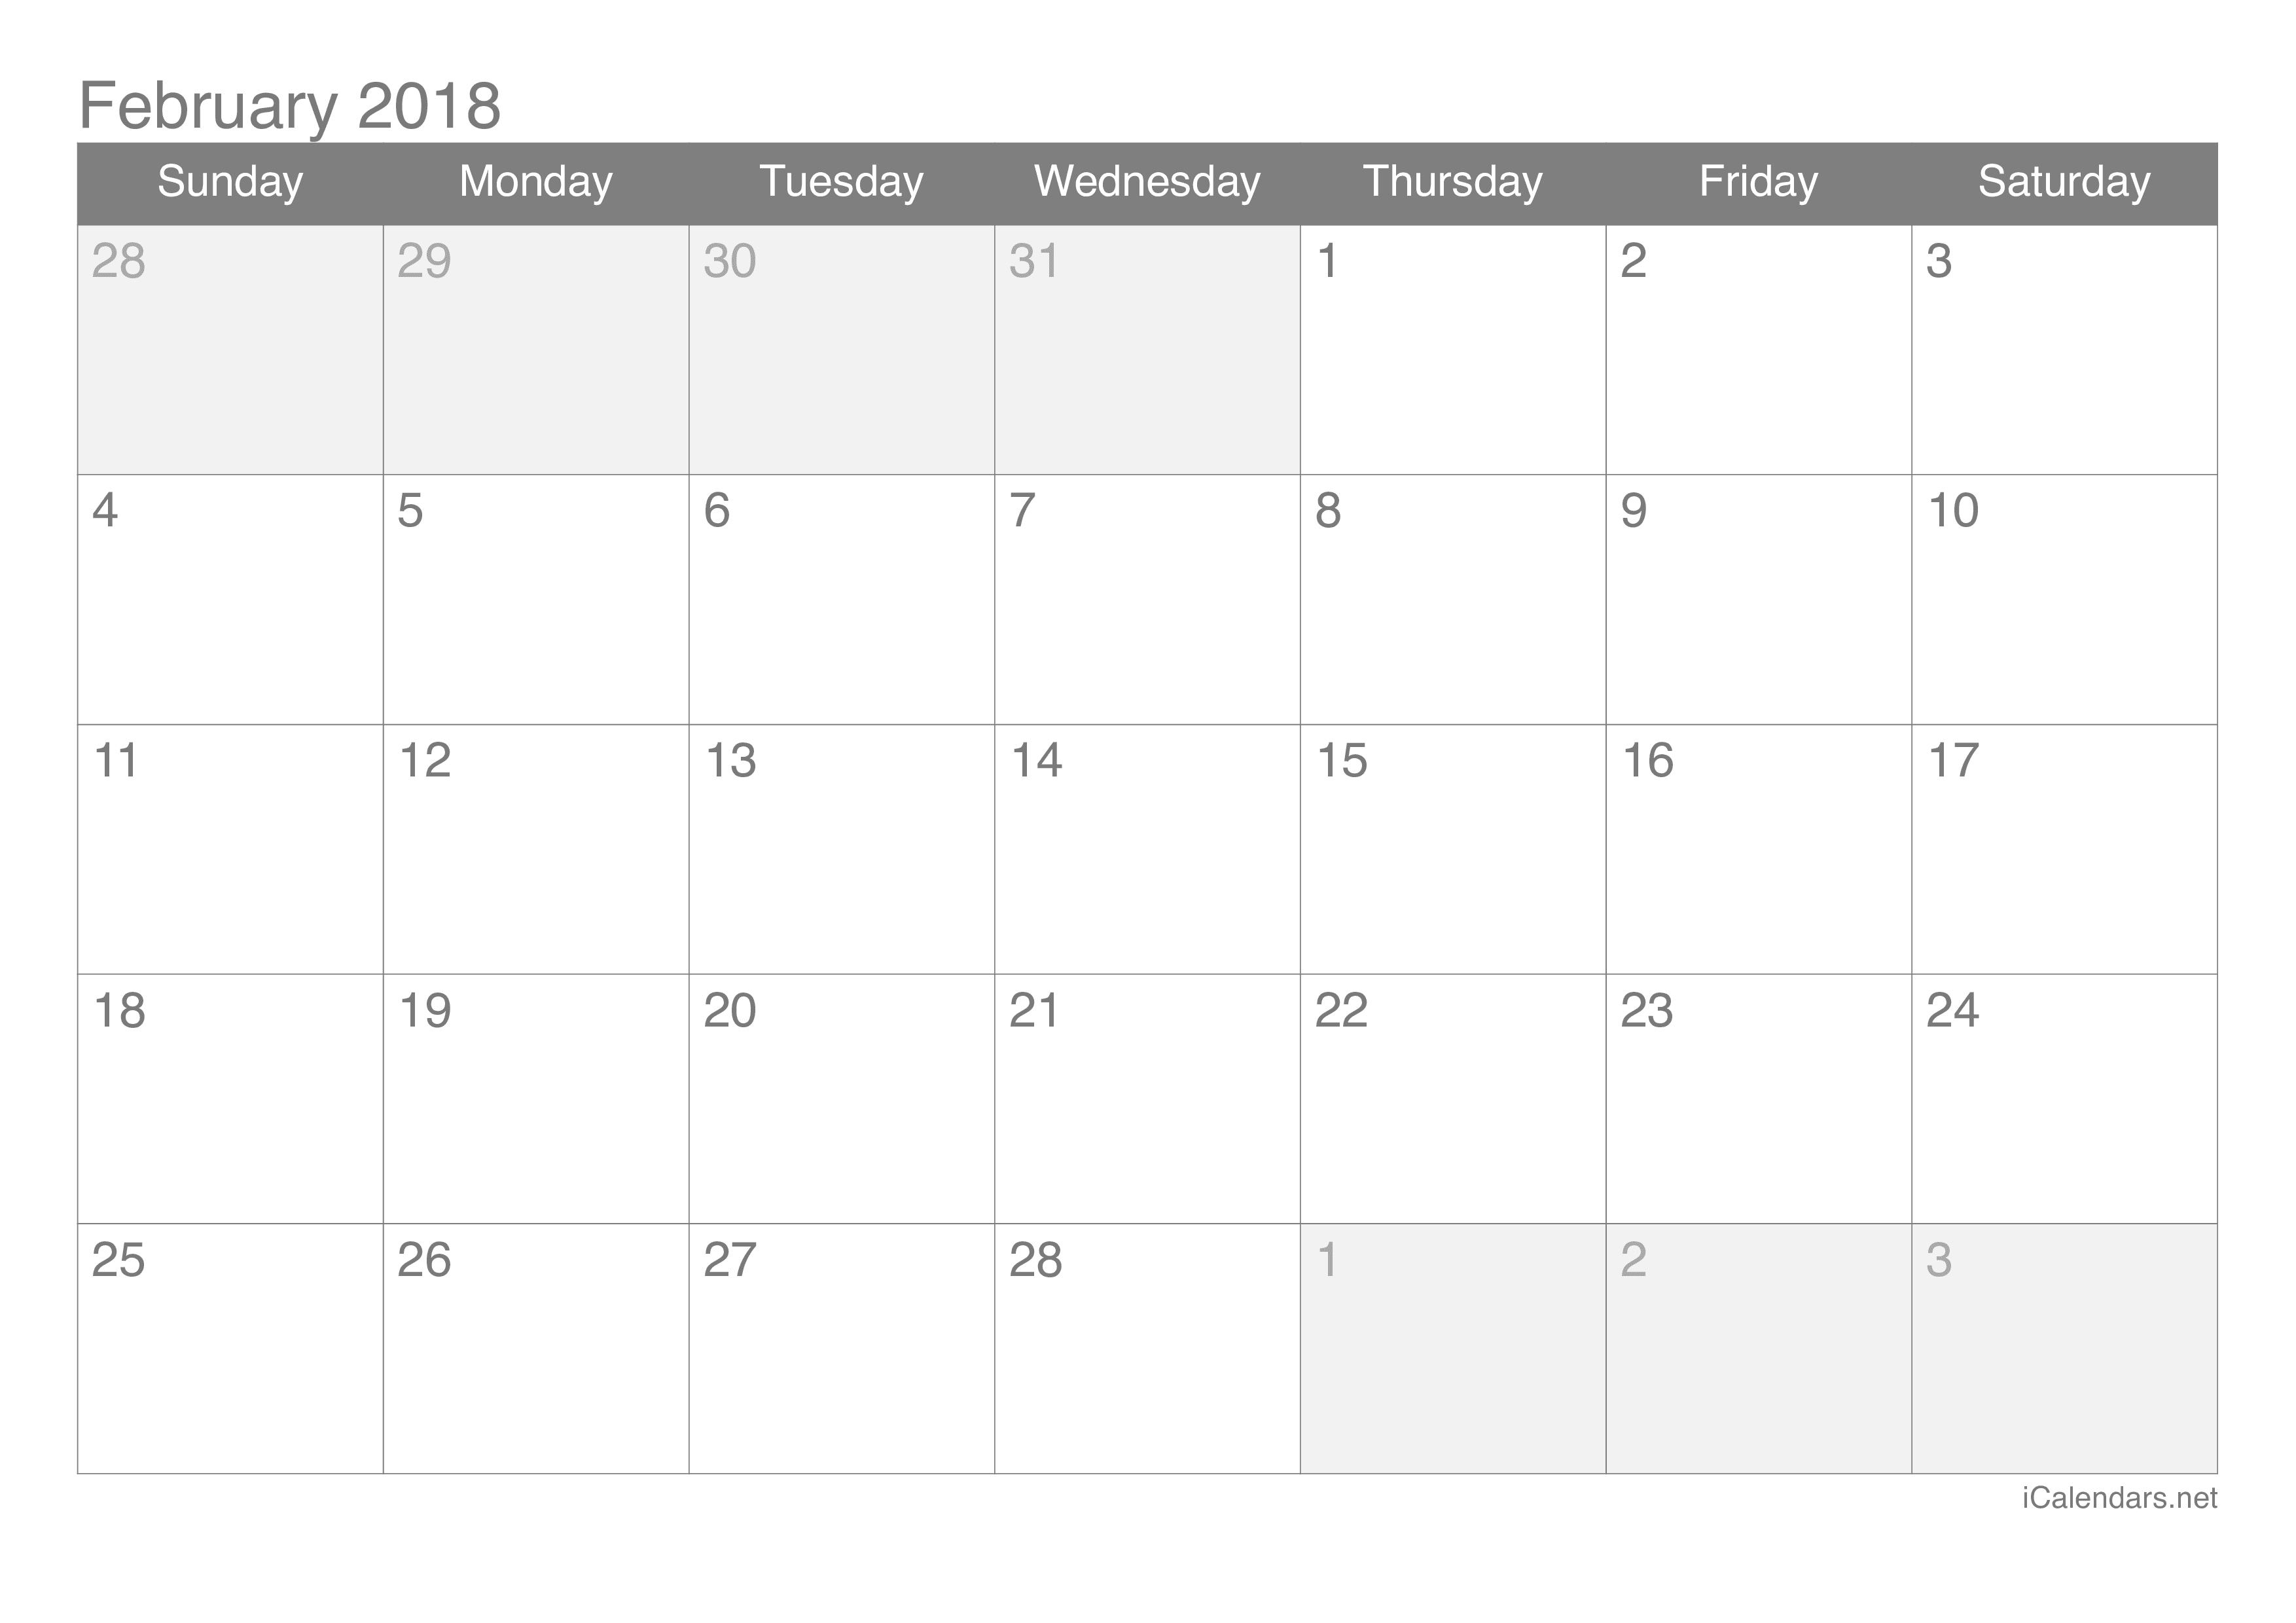 February 2018 Printable Calendar icalendars net